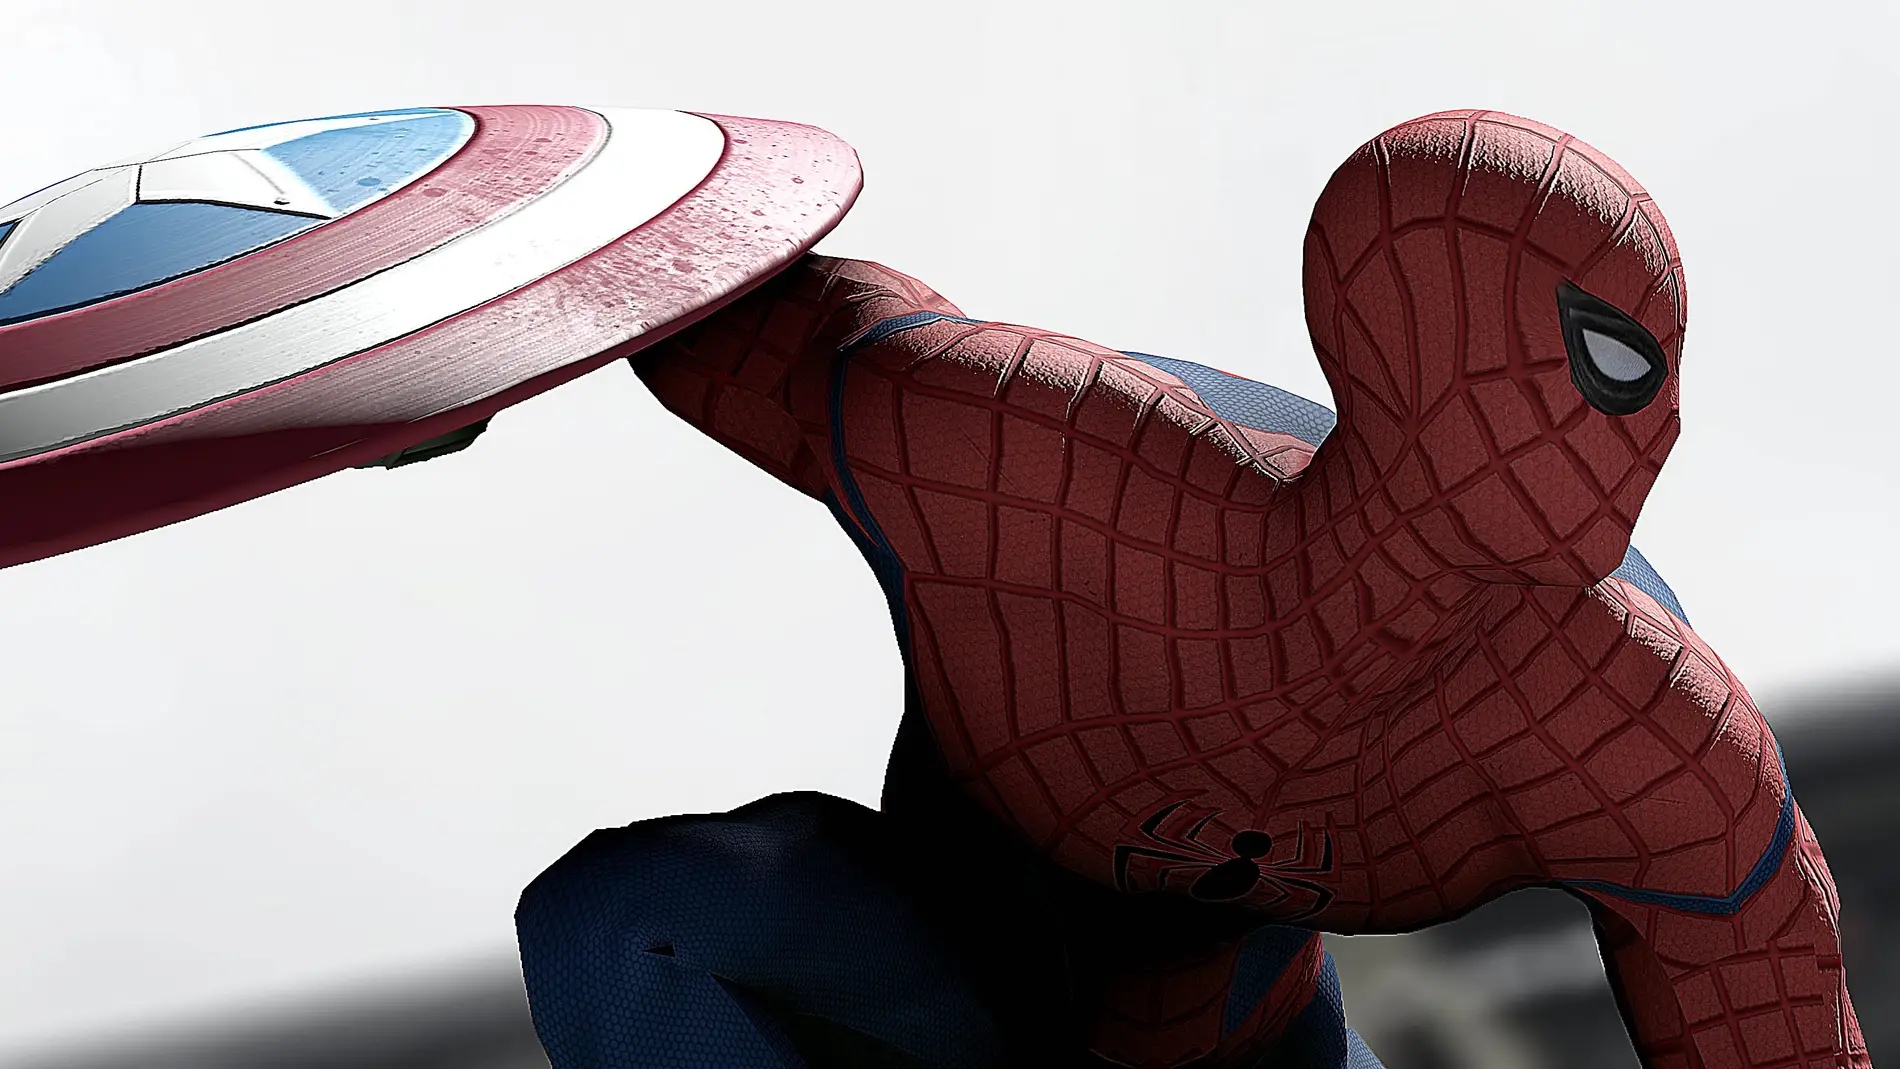 SpiderMan en 'Civil War'